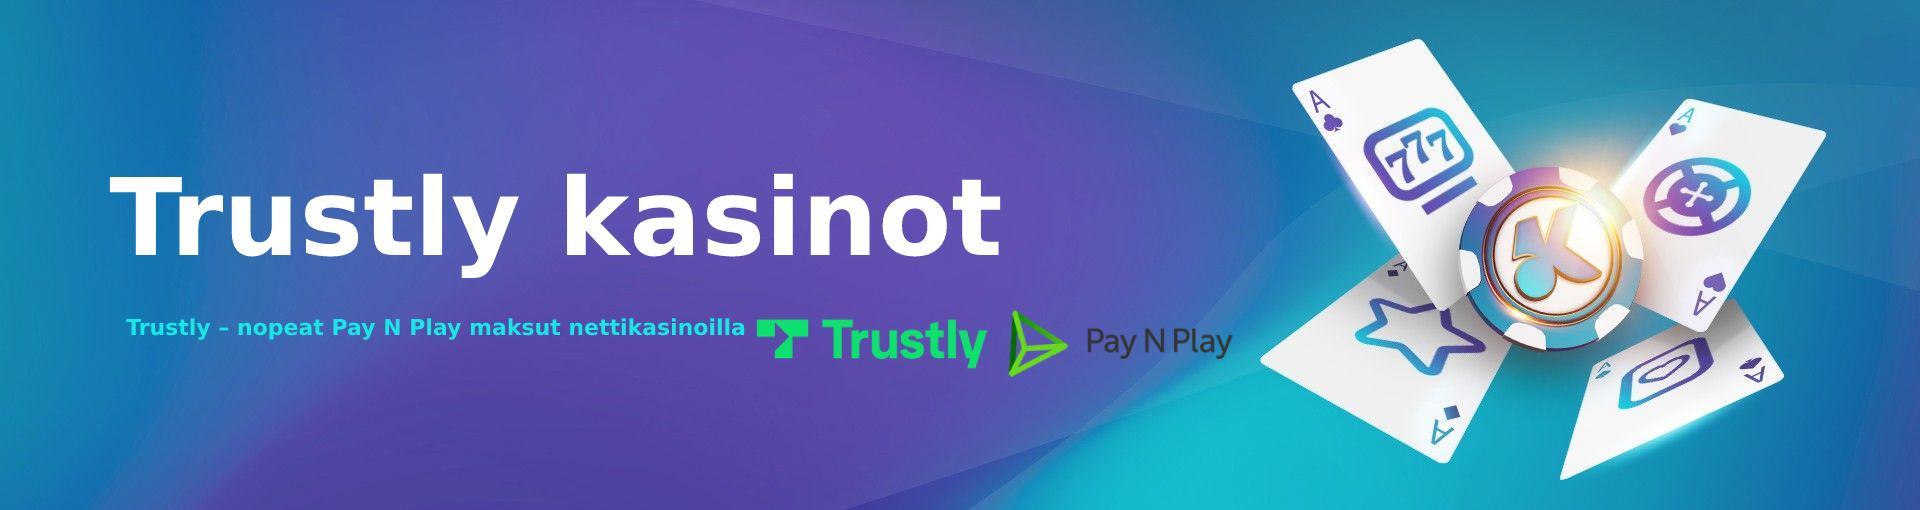 Trustly kasinot - nopeat Pay N Play maksut